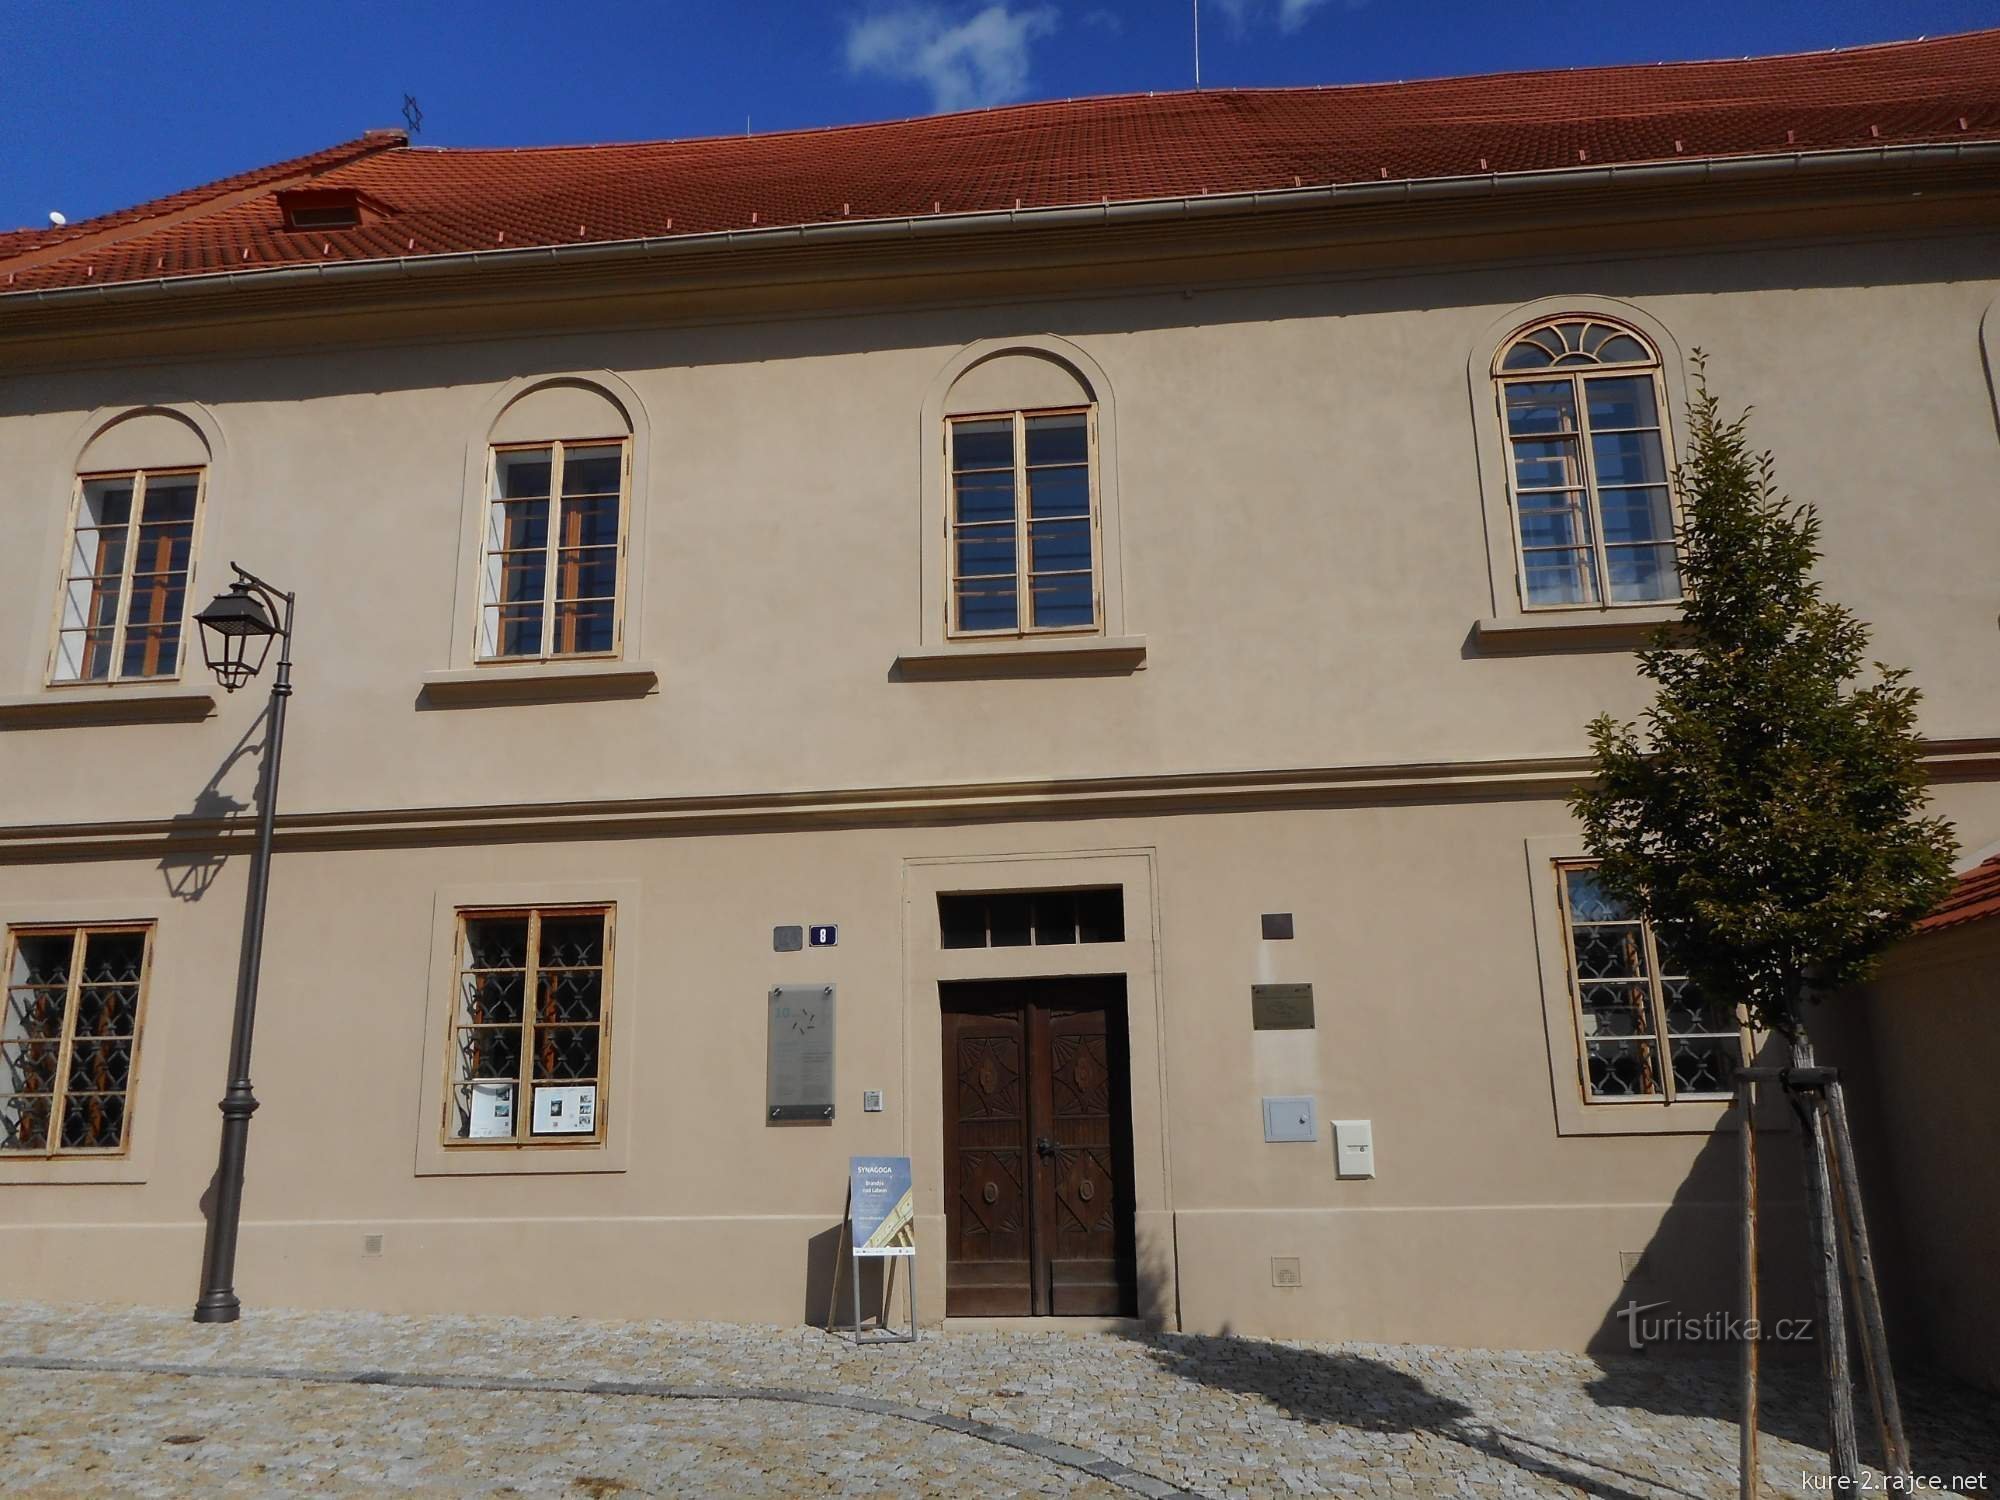 Aujourd'hui, la synagogue sert de musée juif